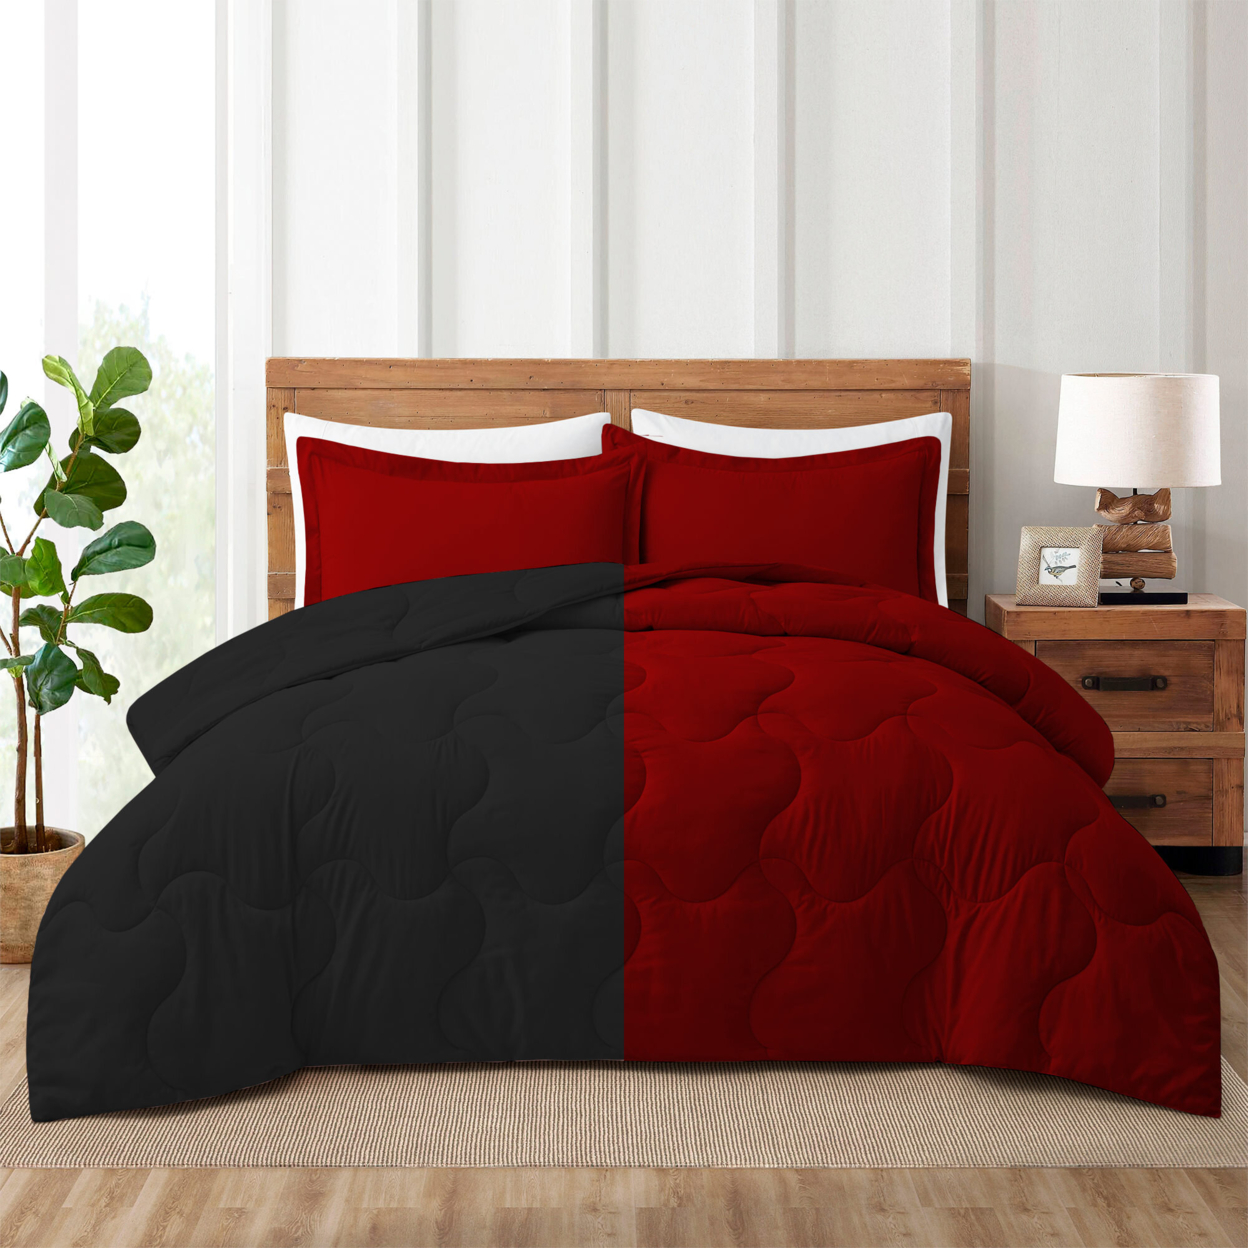 3 Or 2 Pieces Lightweight Reversible Comforter Set With Pillow Shams - Dark Grey/Light Grey, Full/Queen